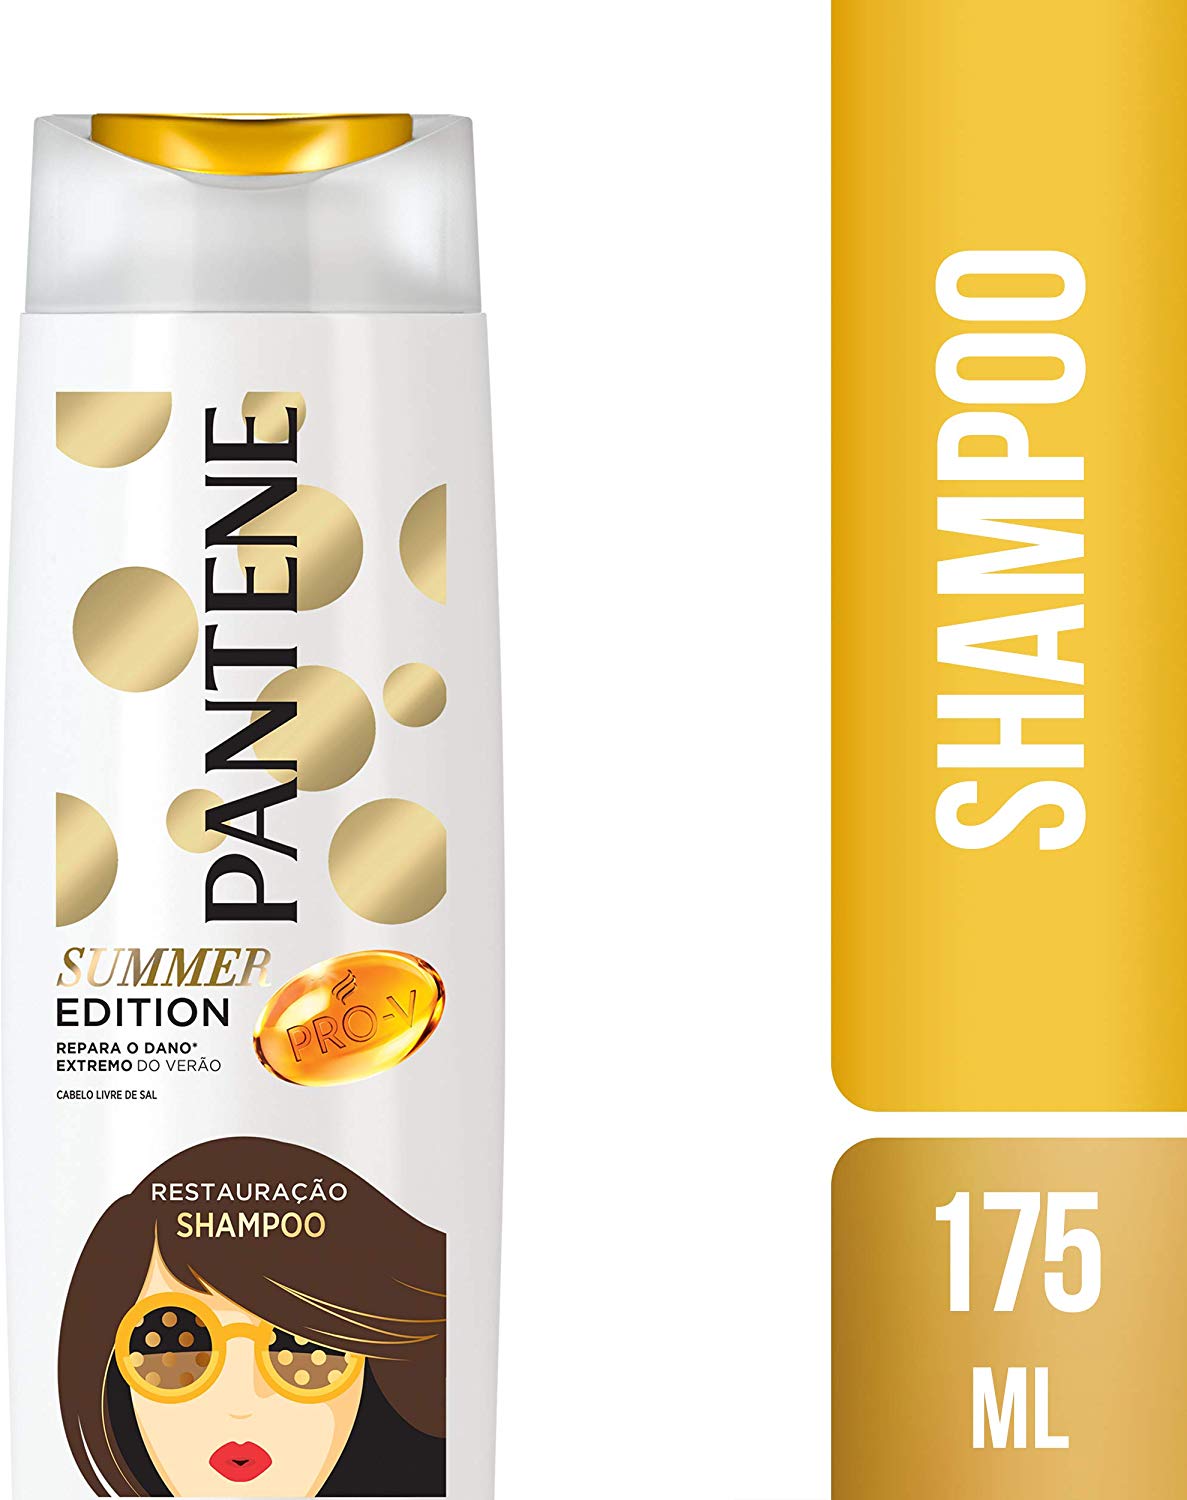  Shampoo Pantene Summer, 175ml 